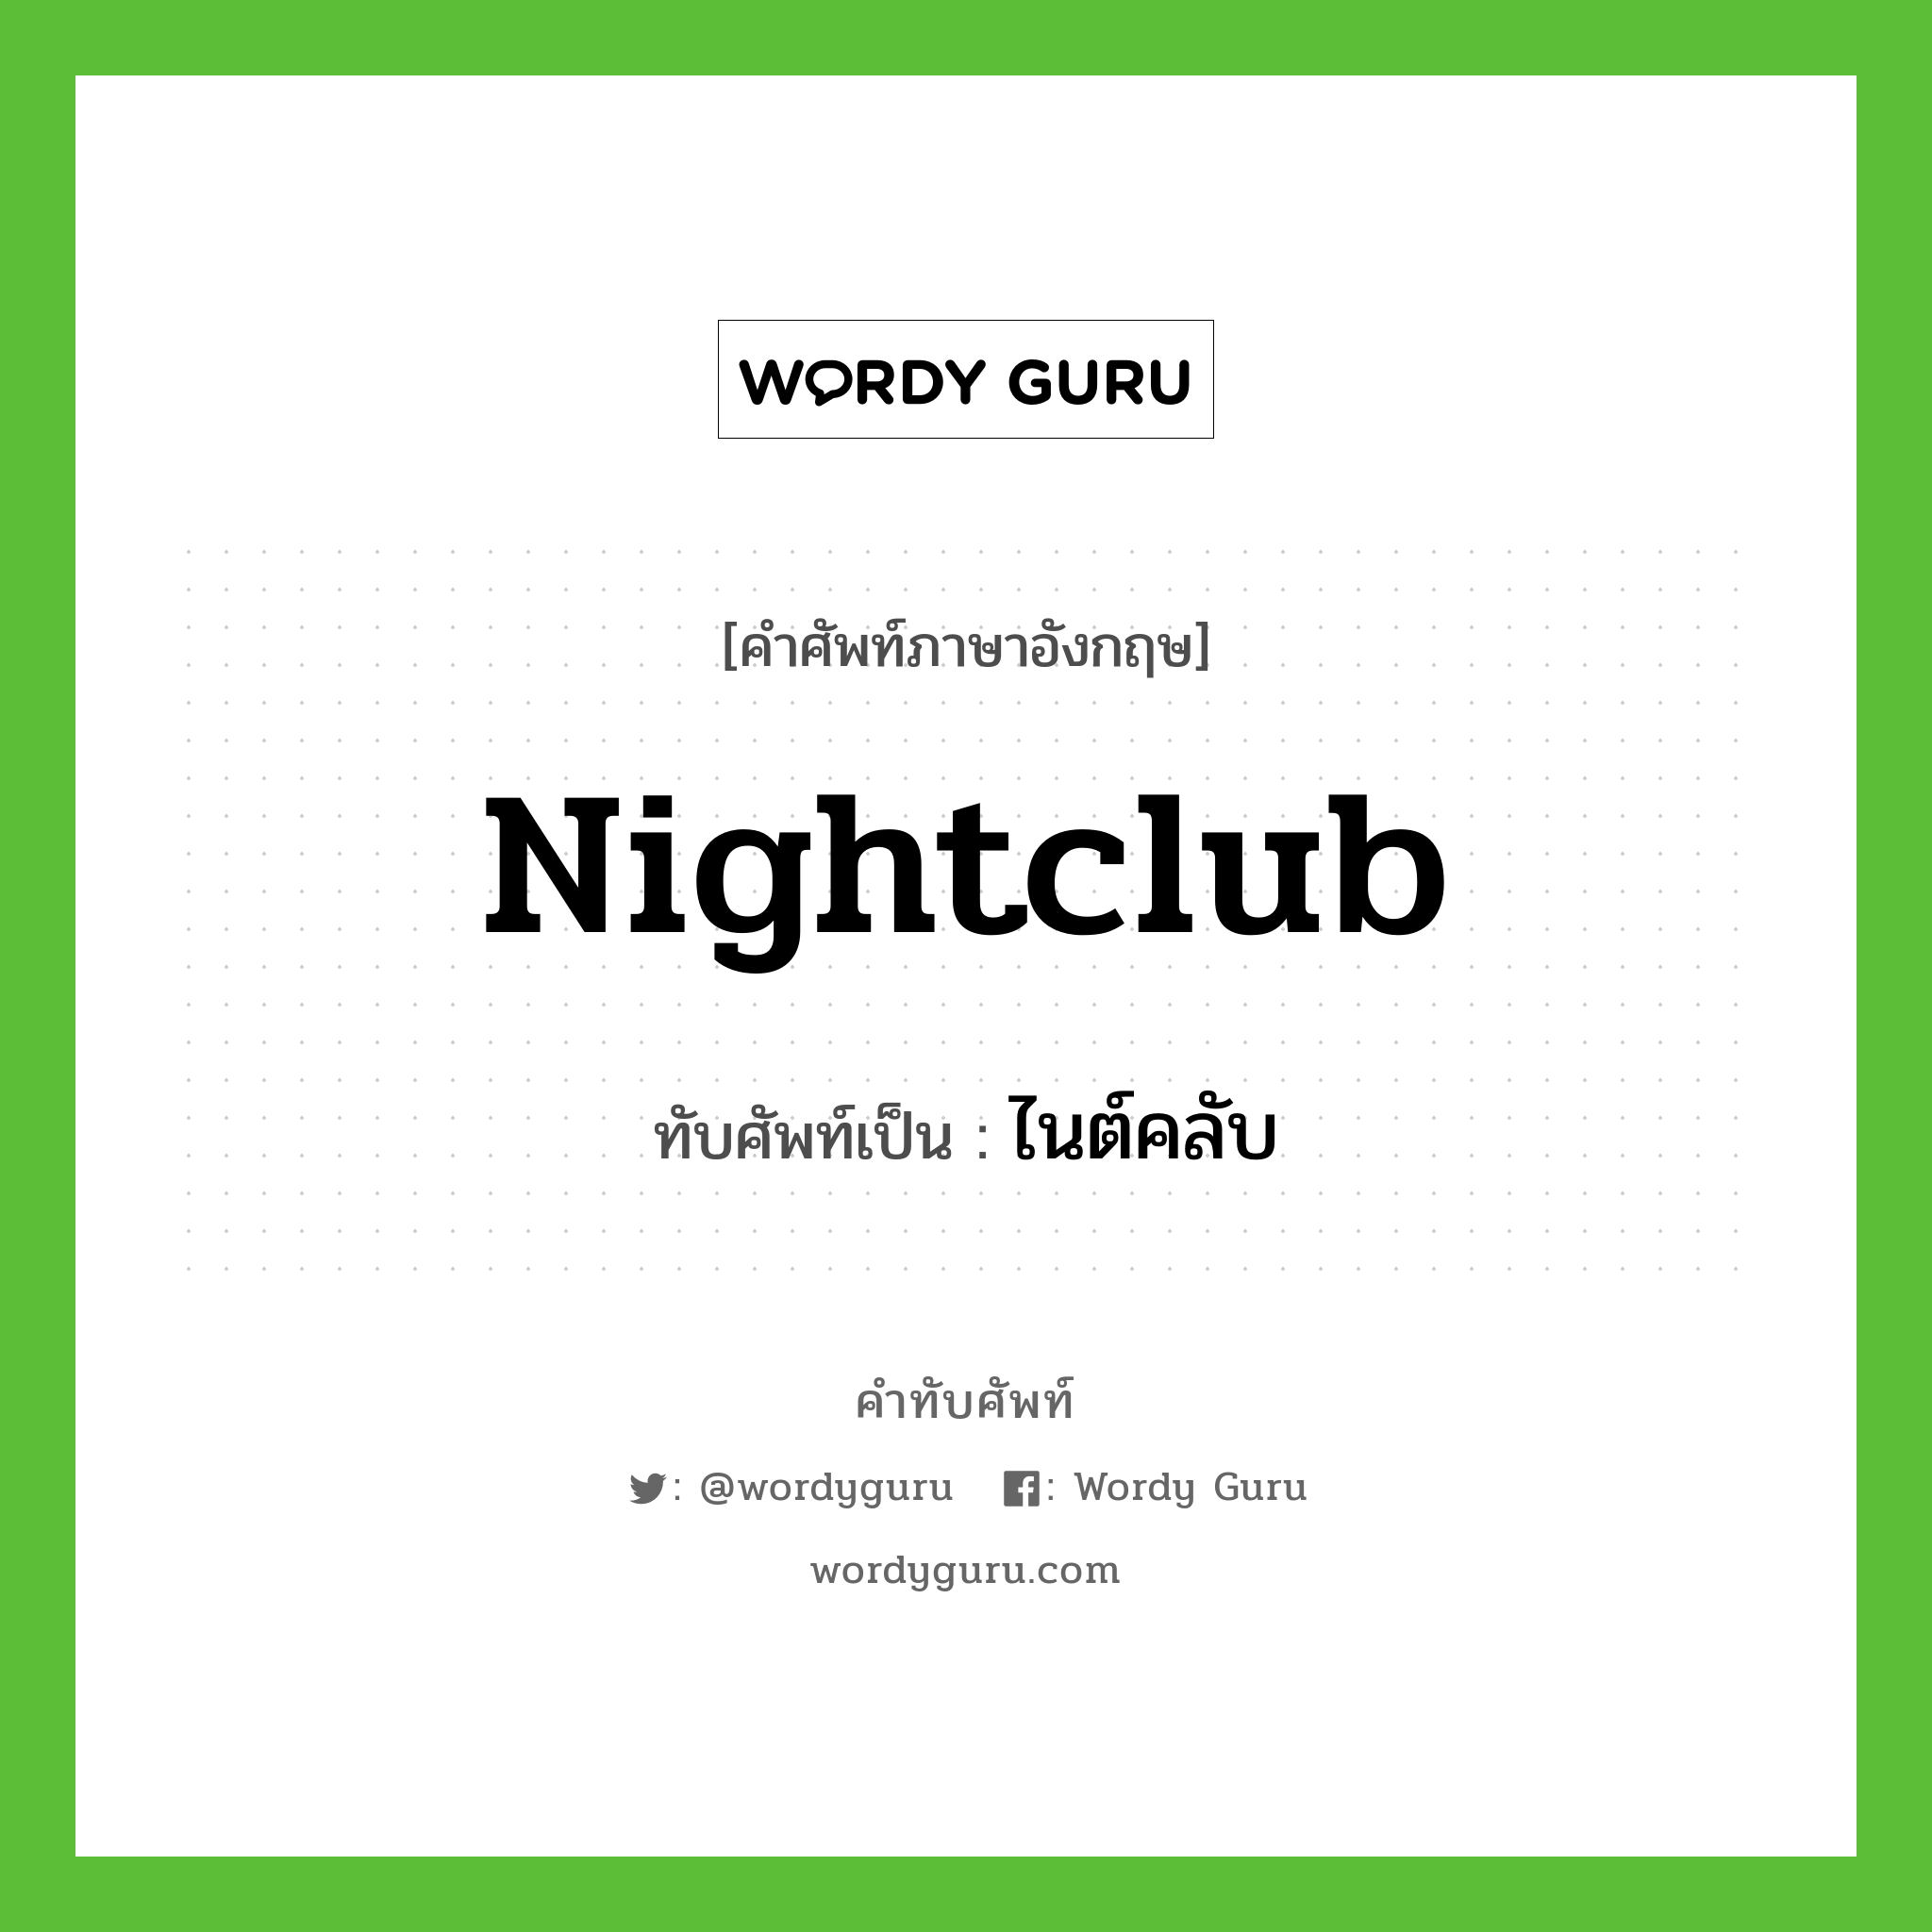 nightclub เขียนเป็นคำไทยว่าอะไร?, คำศัพท์ภาษาอังกฤษ nightclub ทับศัพท์เป็น ไนต์คลับ